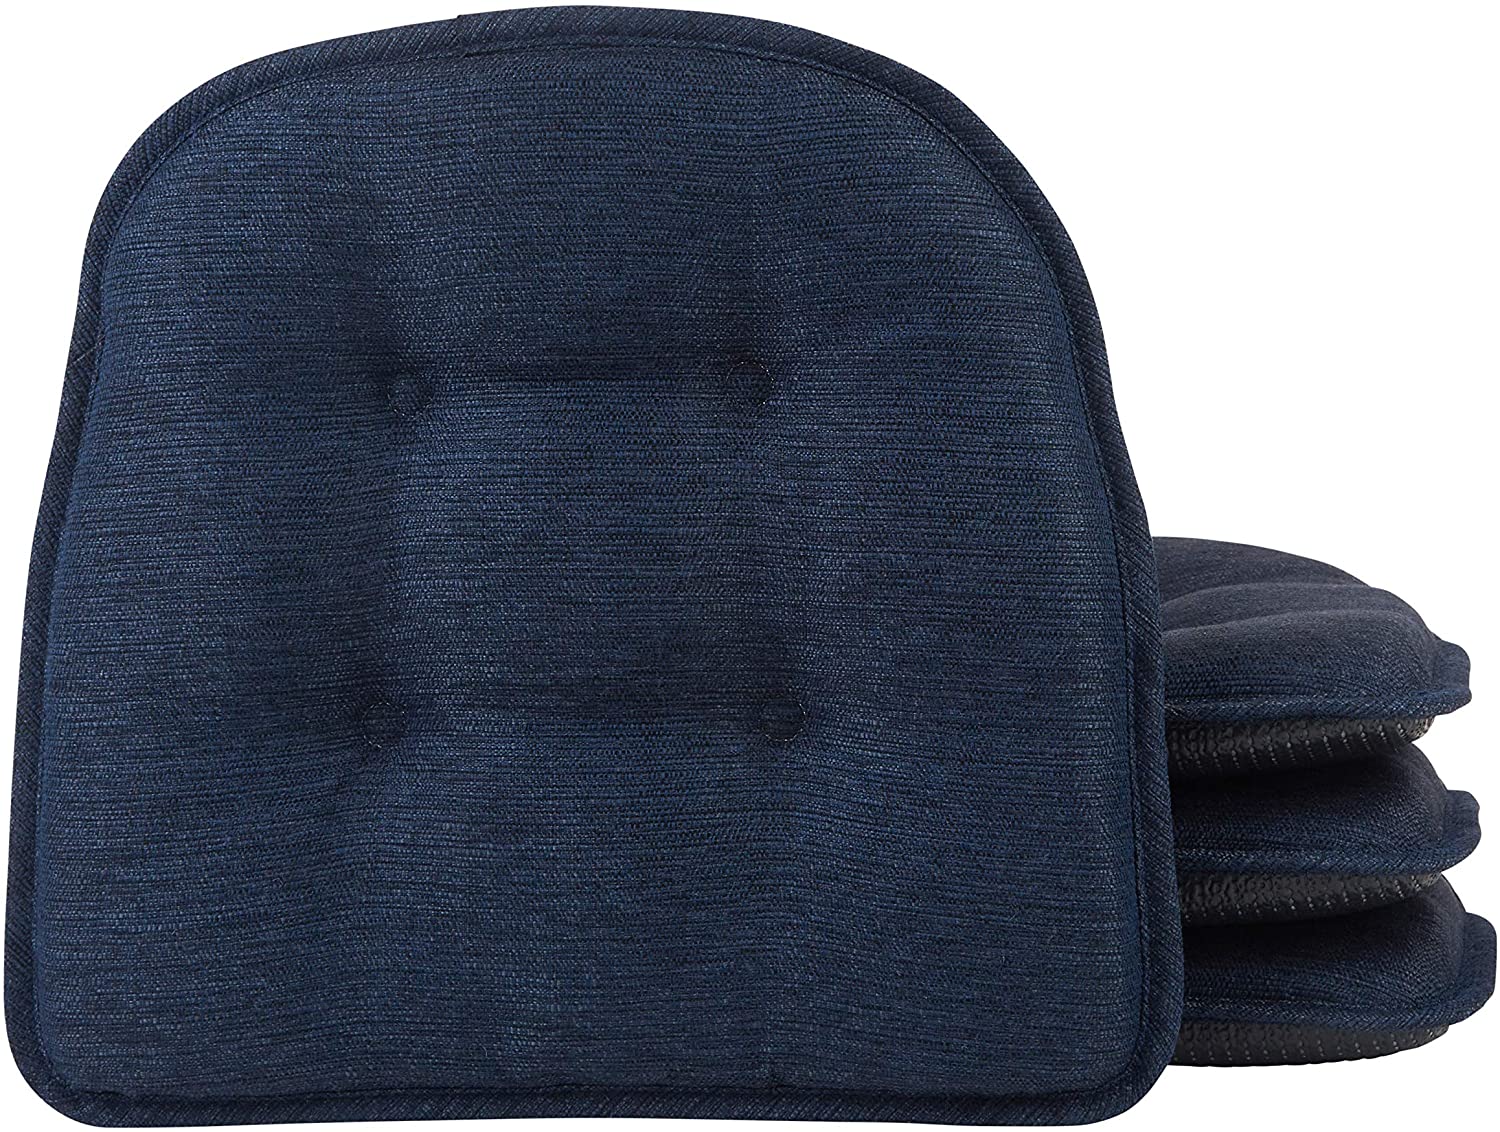 Gorilla Grip Ultra Soft Non-Slip Chair Pads, 4-Pack